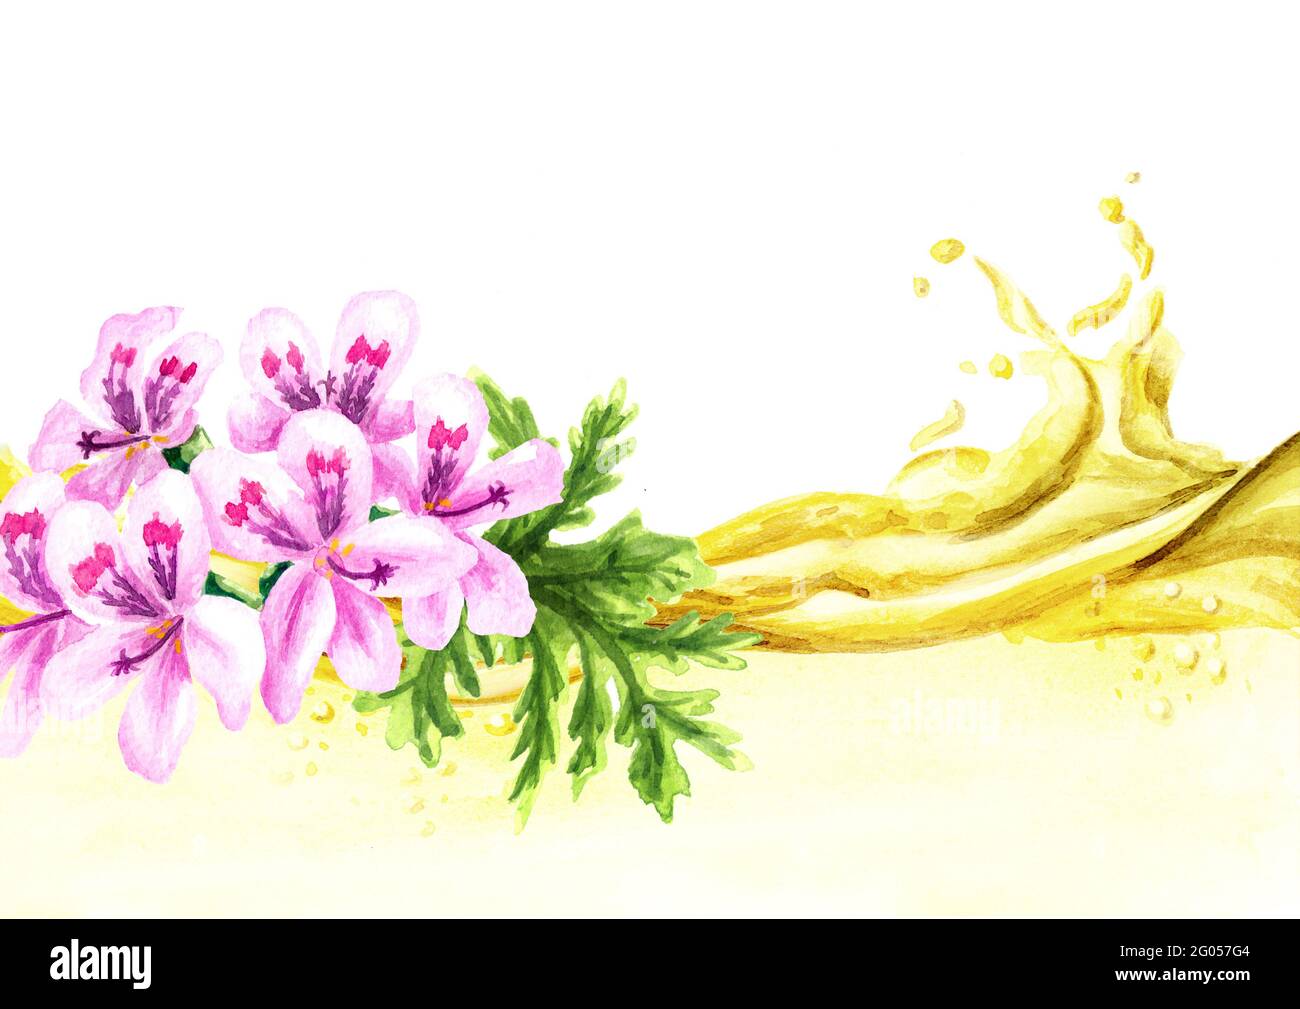 Pelargonium graveolens or Pelargonium x asperum, geranium flower and essential wave. Watercolor hand drawn illustration, isolated on white background Stock Photo